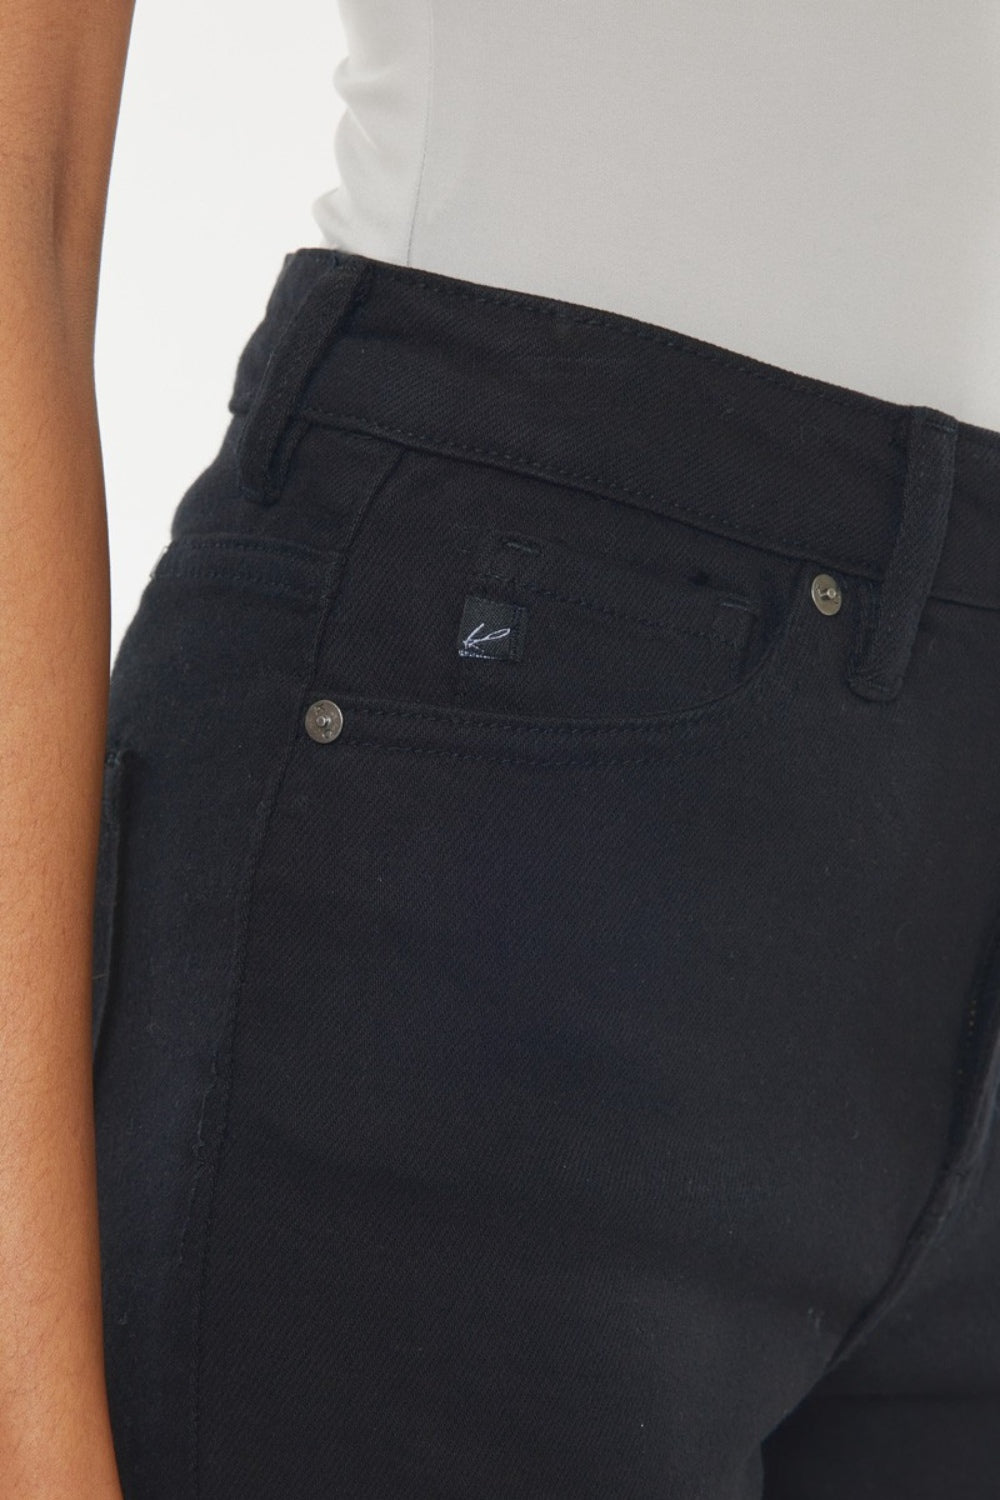 KanCan High Waisted Black Denim Shorts - Inspired Eye Boutique